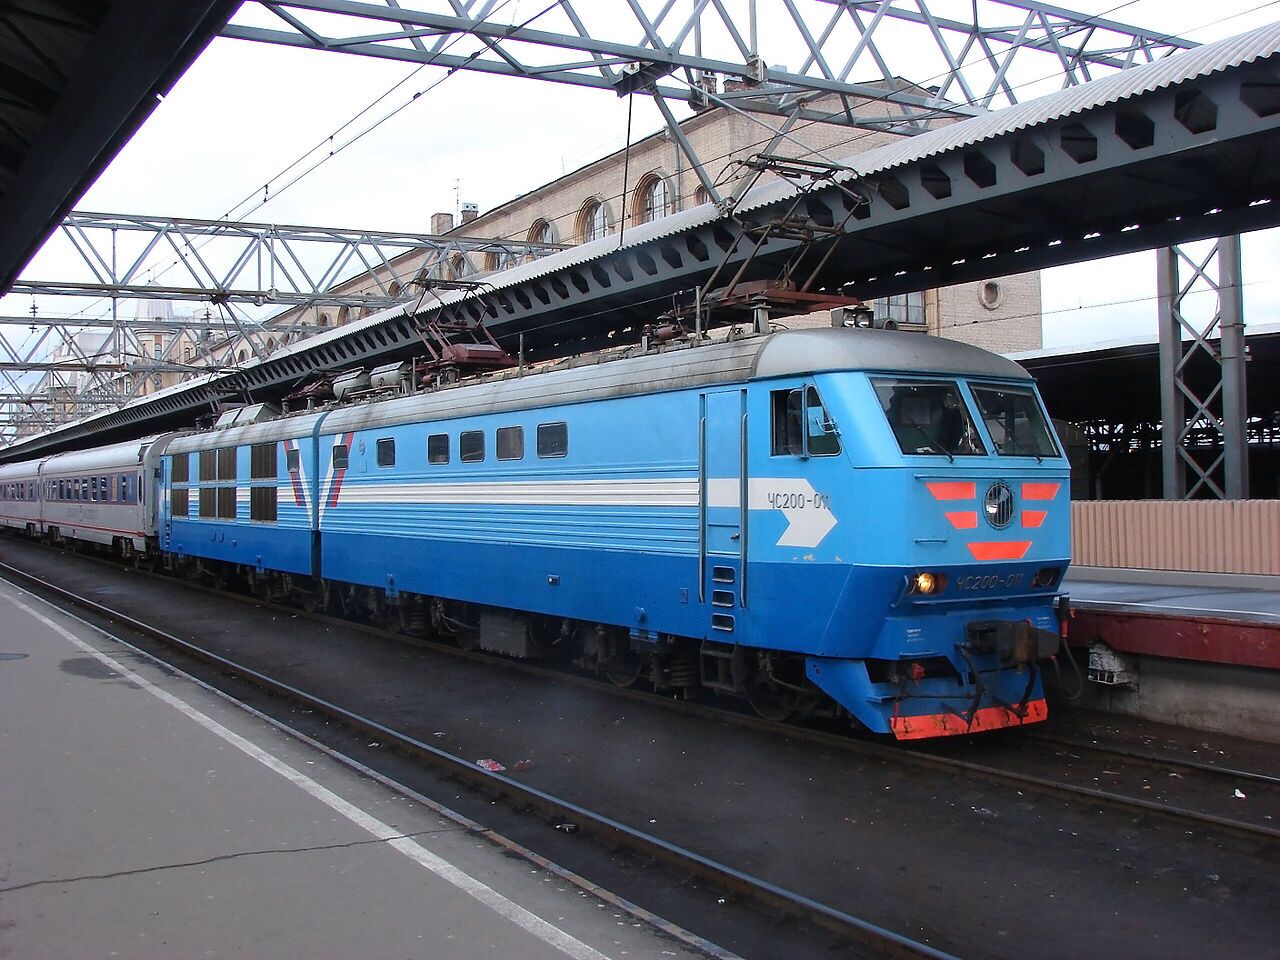 ChS200-011號機車牽引涅夫斯基特快號列車